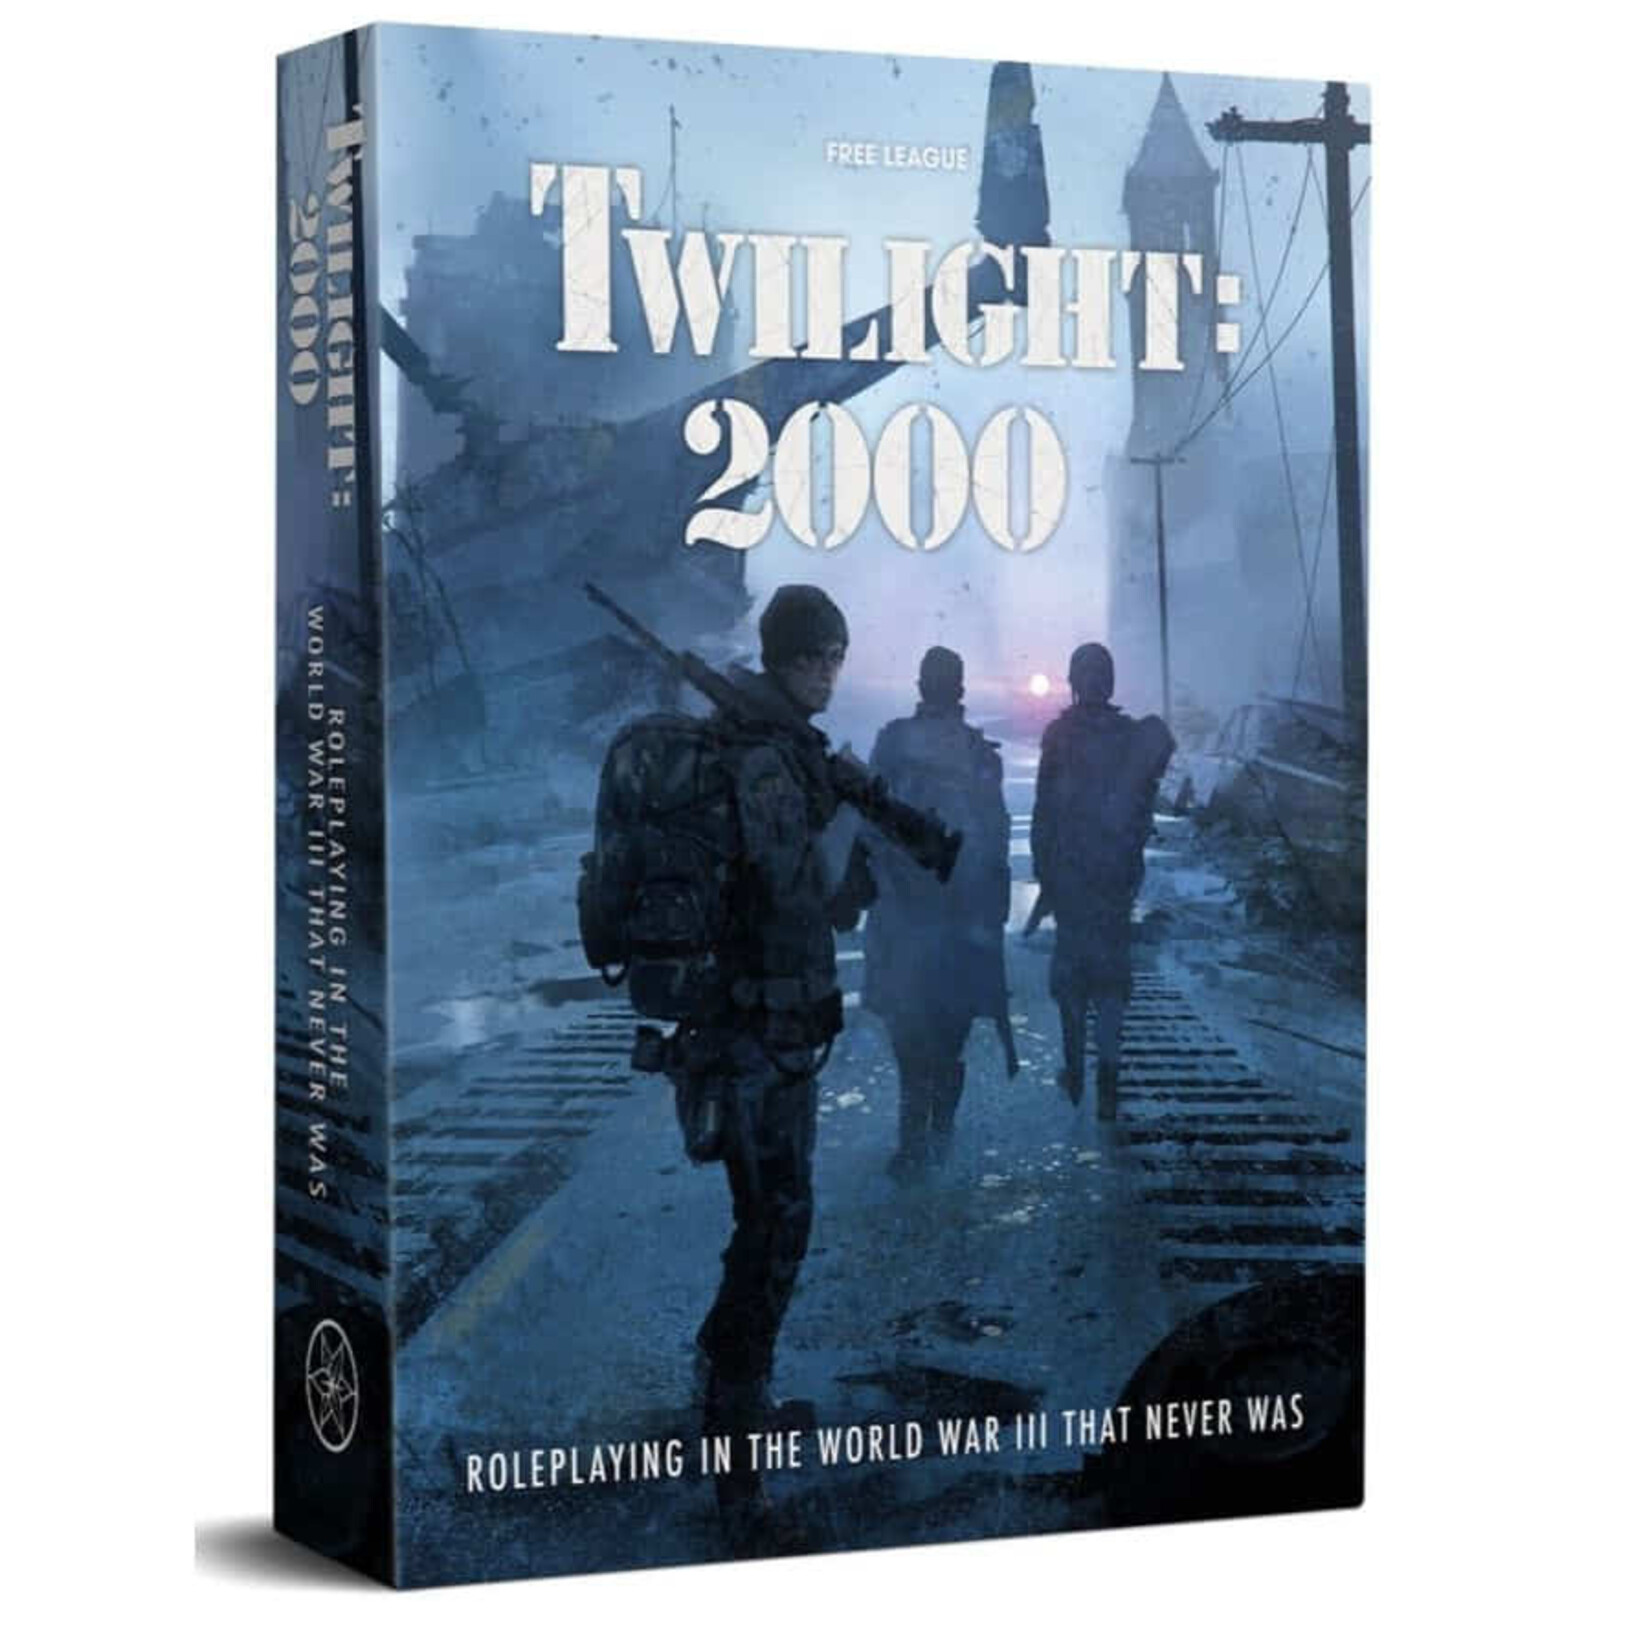 Free League Publishing Twilight: 2000 Core Box Set